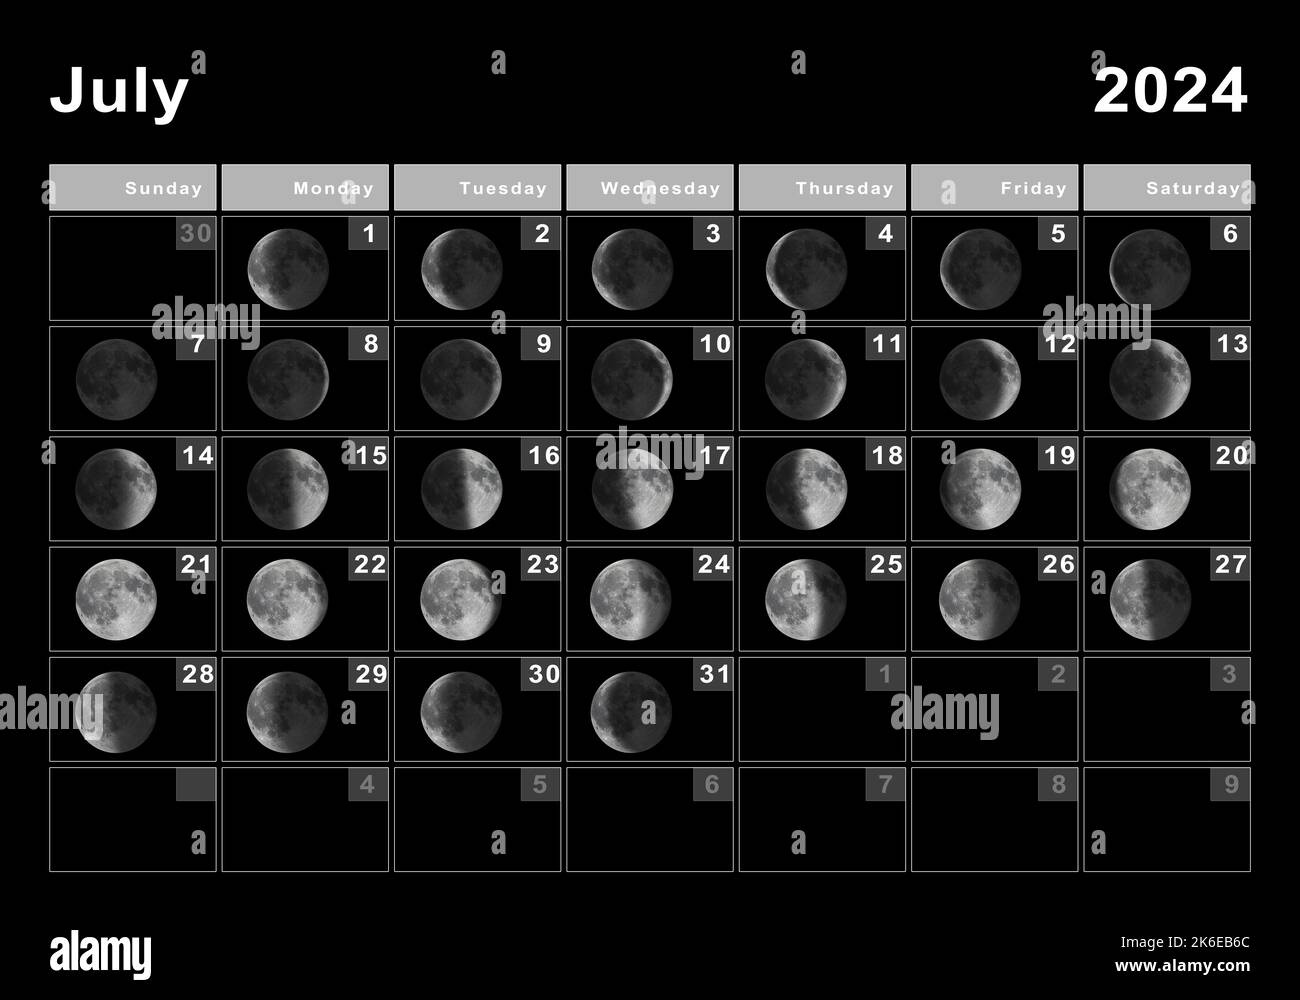 July 2024 Lunar Calendar, Moon Cycles, Moon Phases Stock Photo - Alamy in July 2 Lunar Calendar 2024